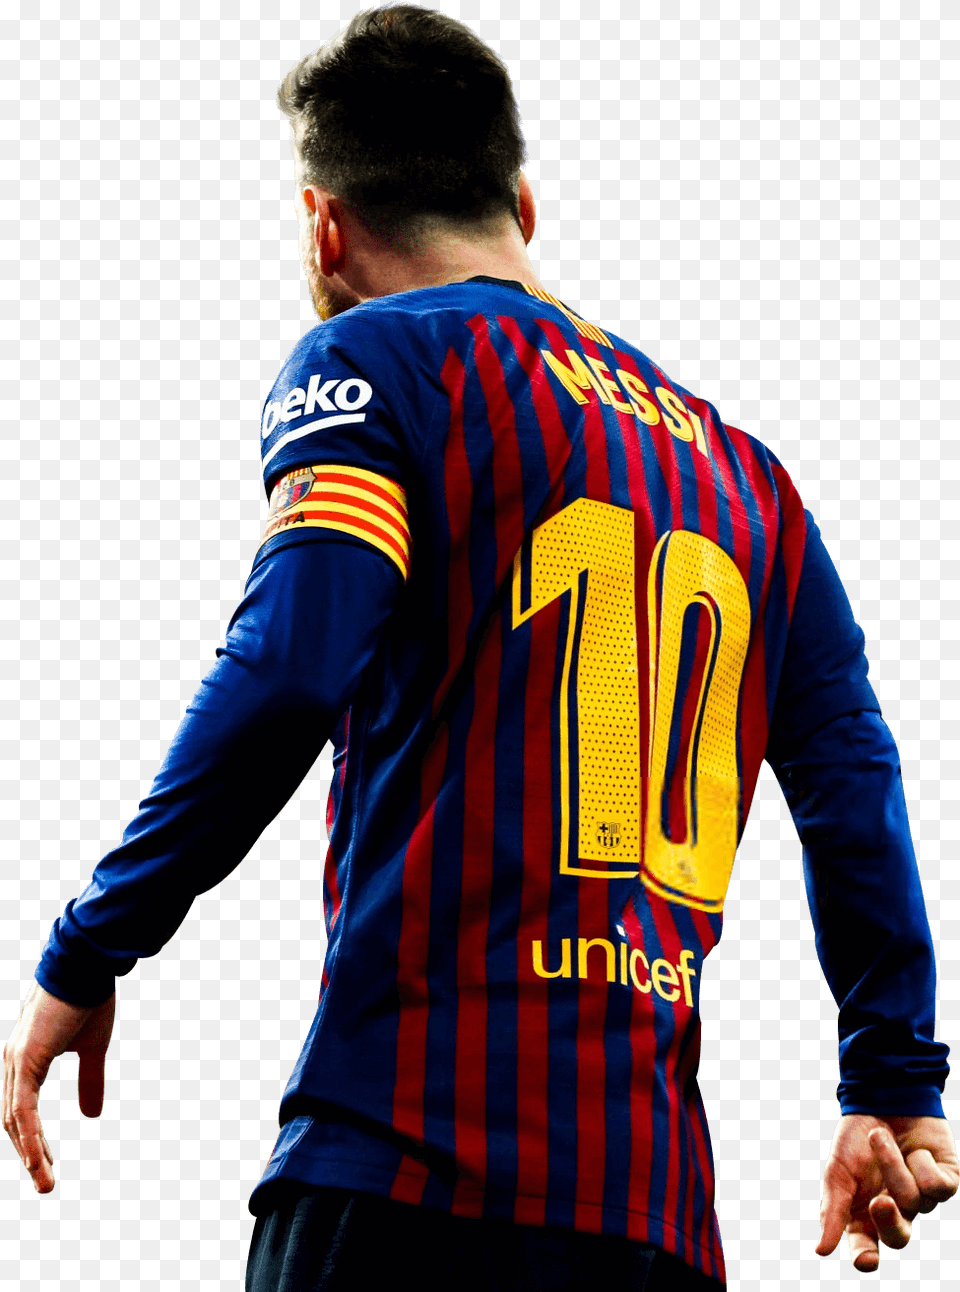 Lionel Messi Captain Barcelona Plaid, Adult, Body Part, Clothing, Shirt Free Transparent Png